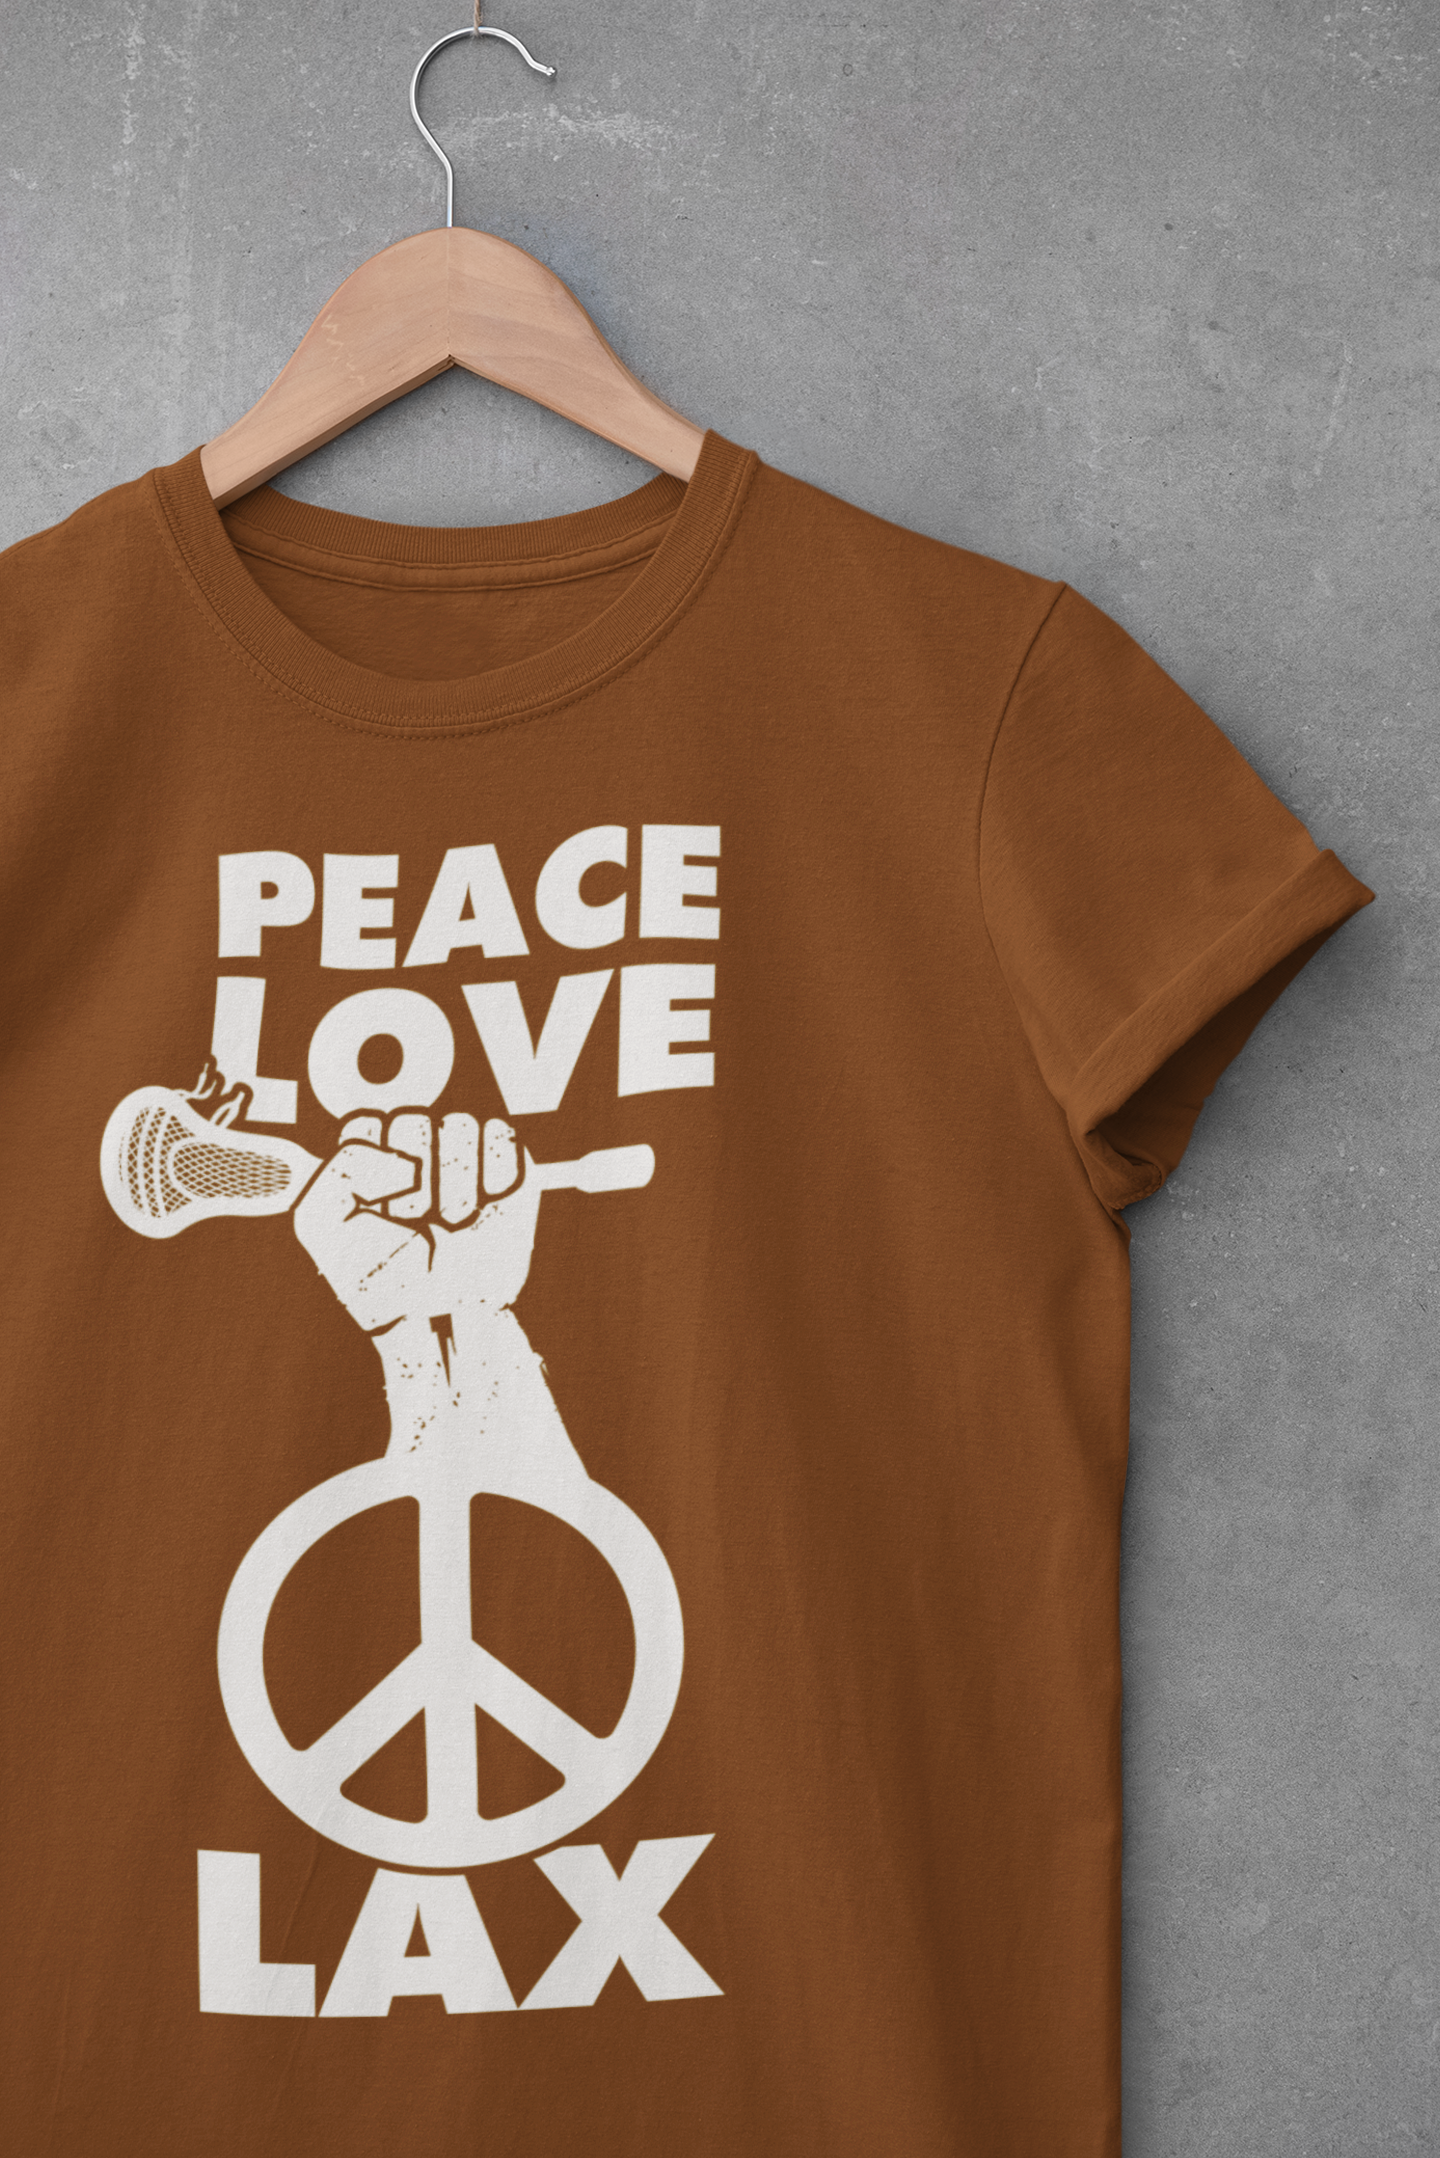 PEACE LAX LOVE TEE